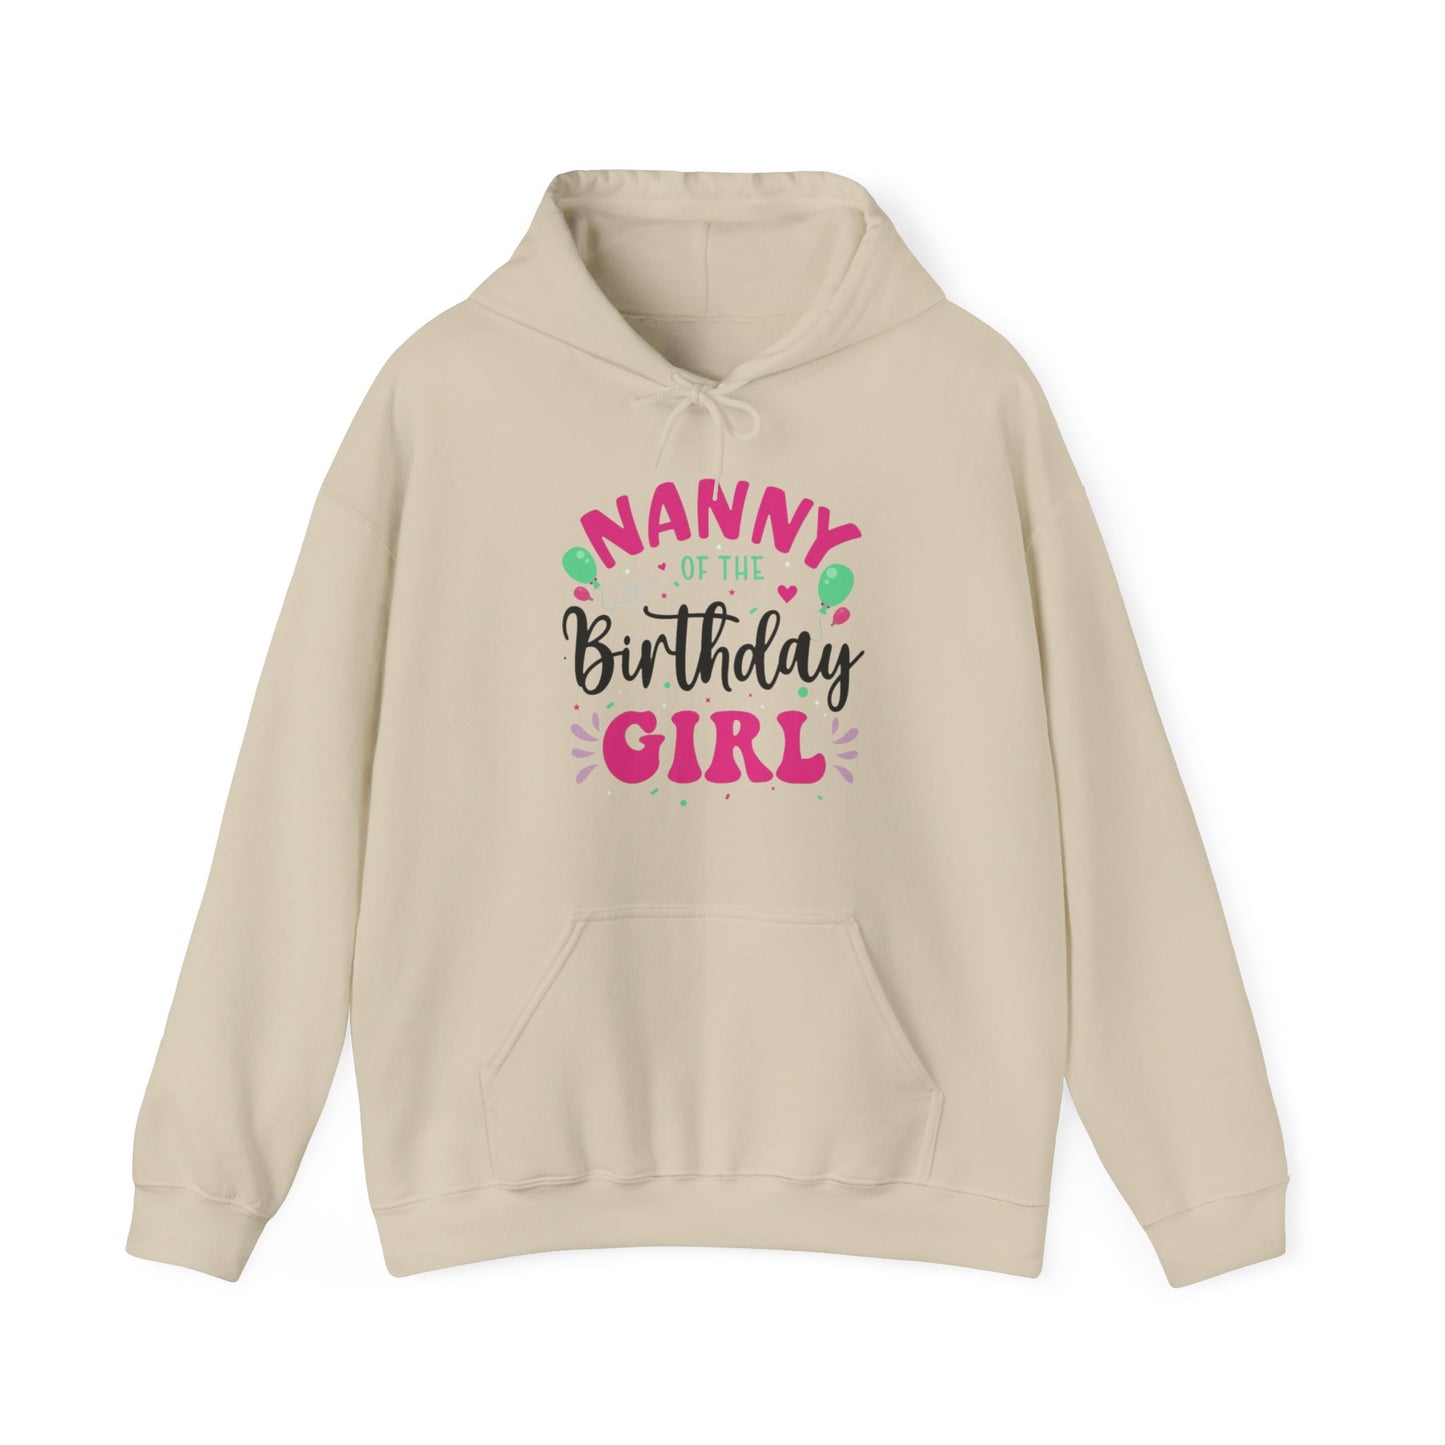 Nanny of the Birthday Girl - Hoodie